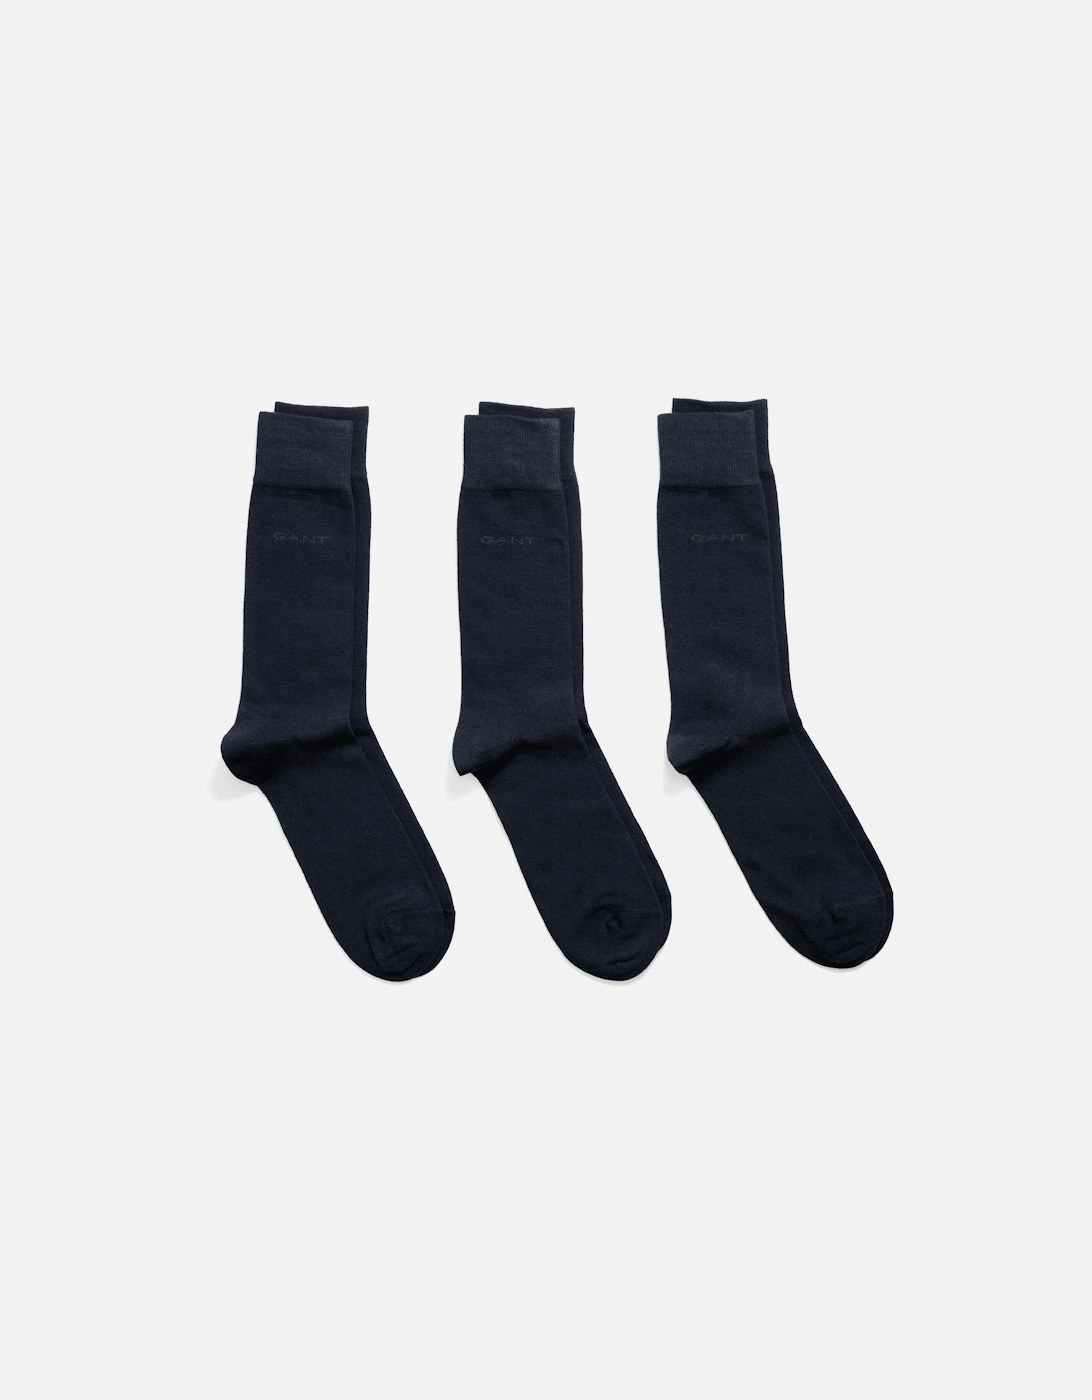 Black Soft Cotton Socks